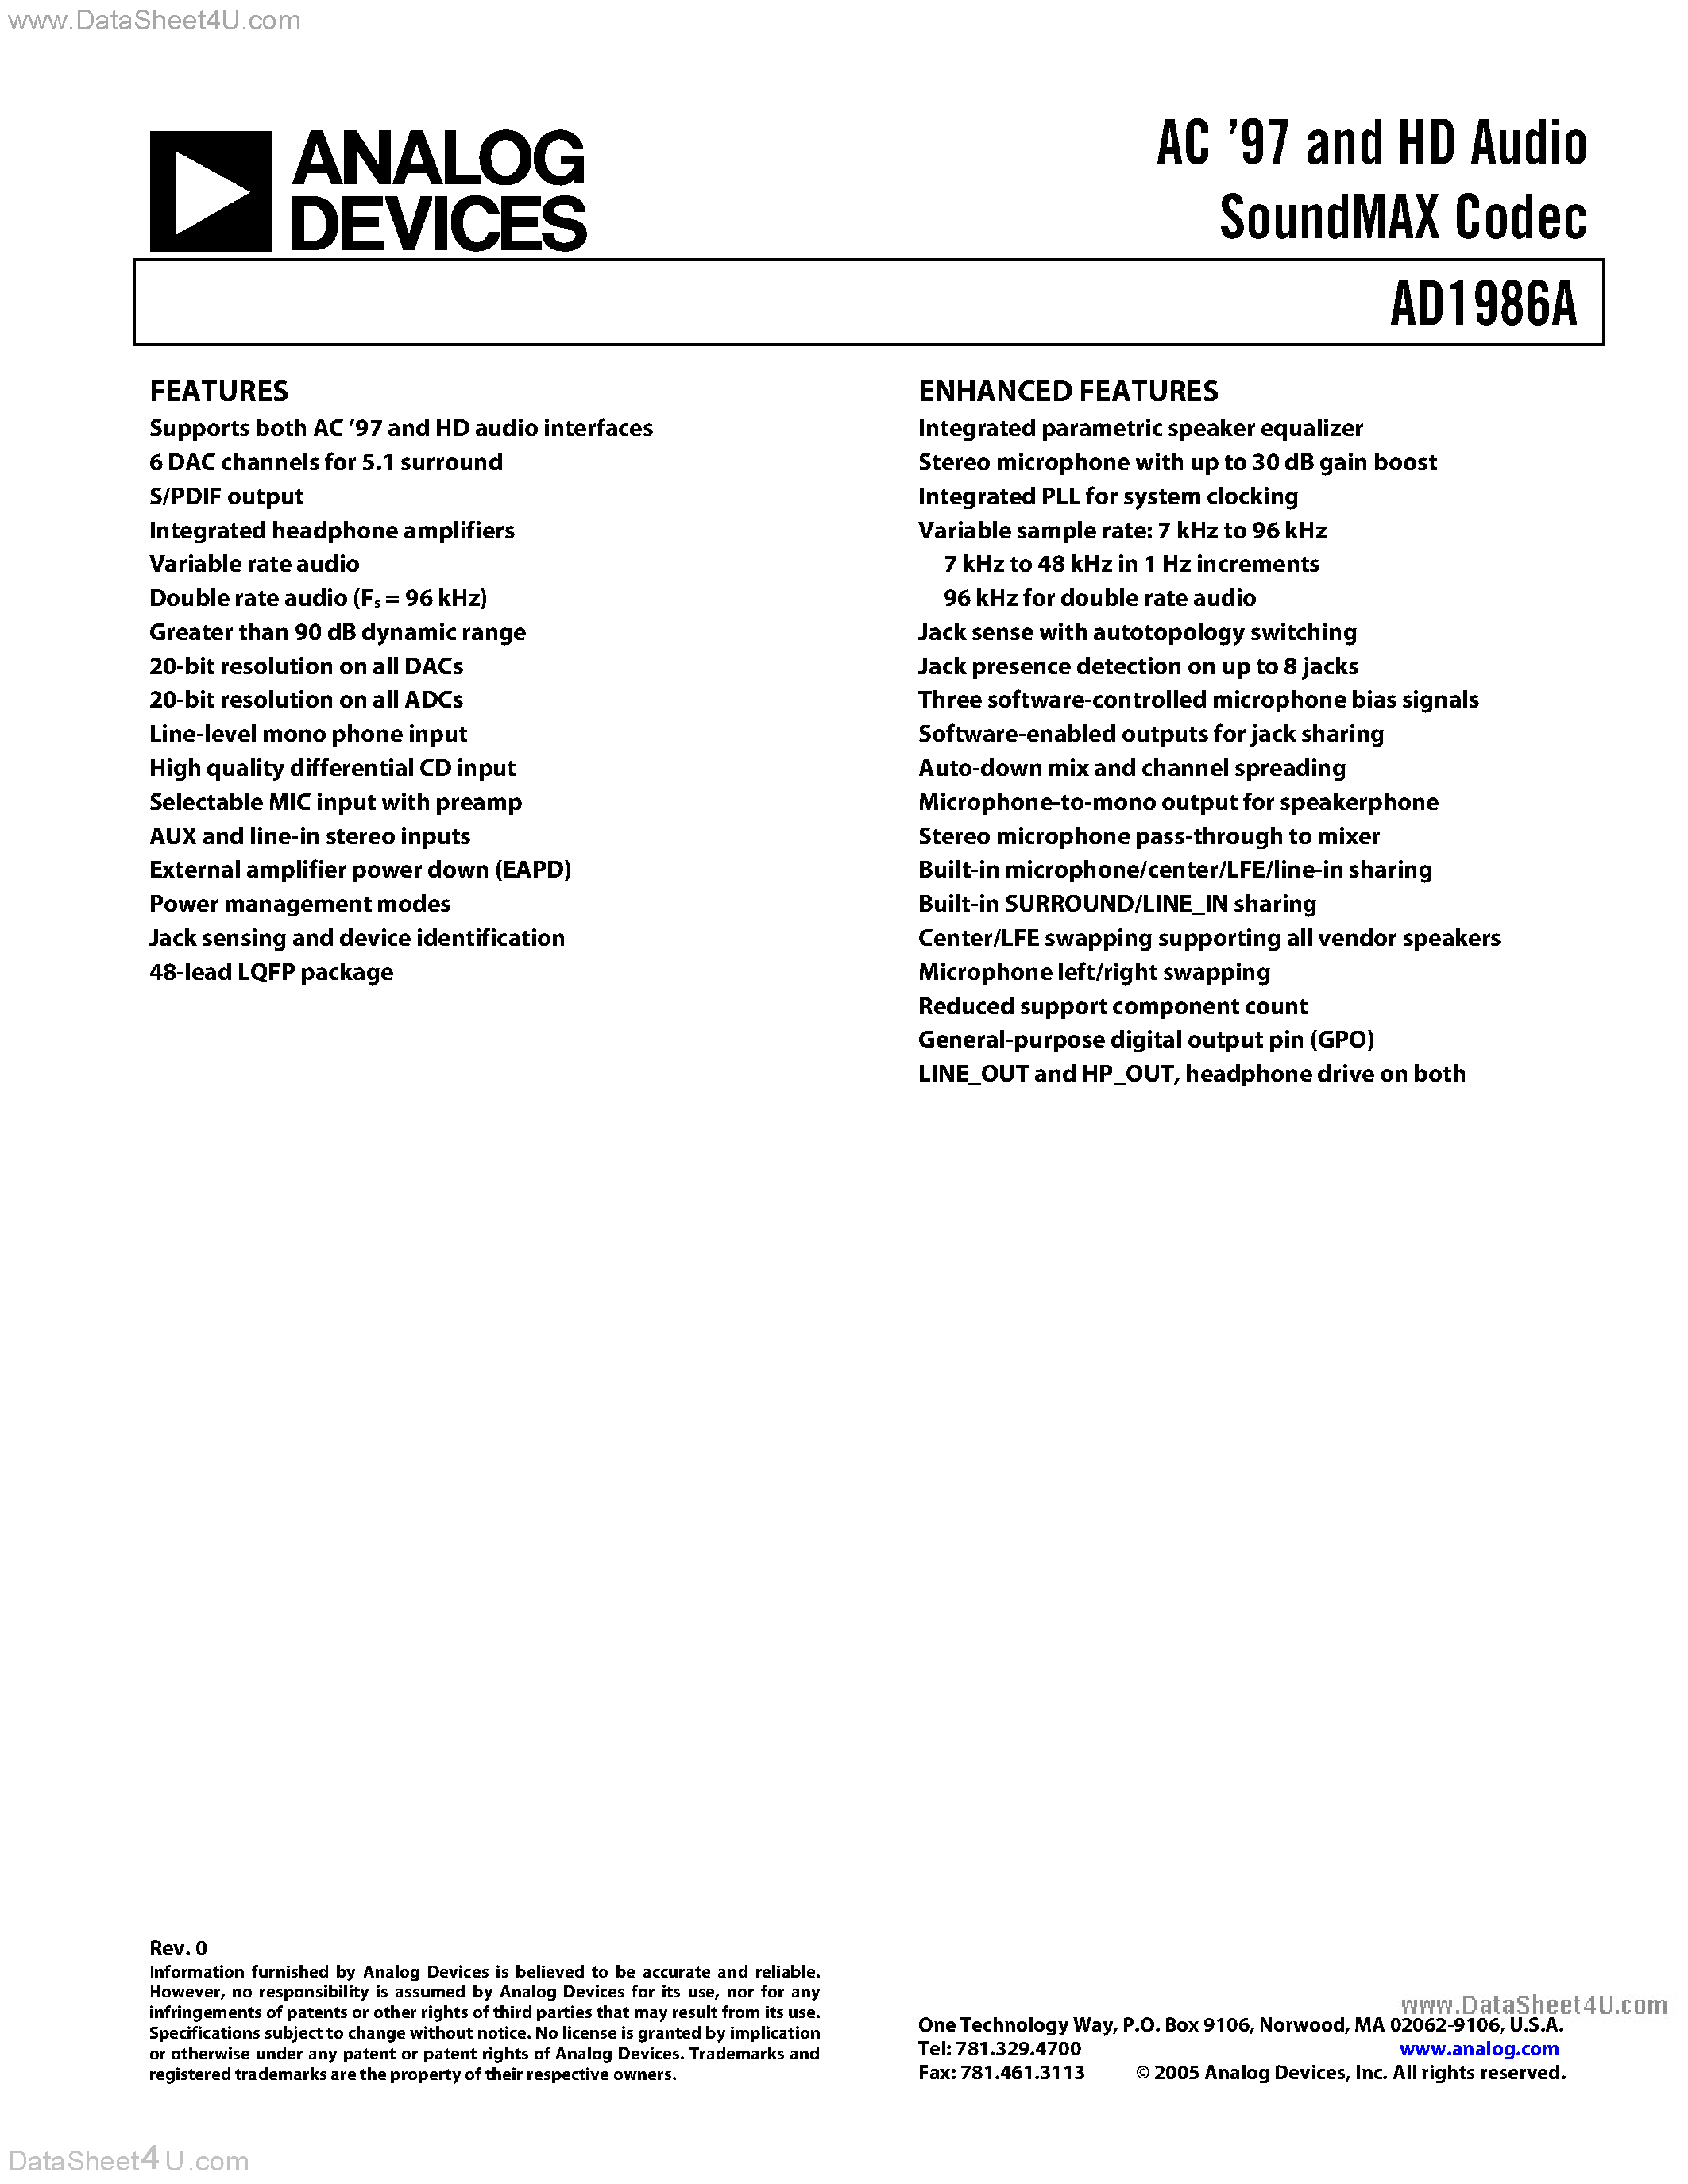 Datasheet AD1986A - HD Audio SoundMAX Codec page 1